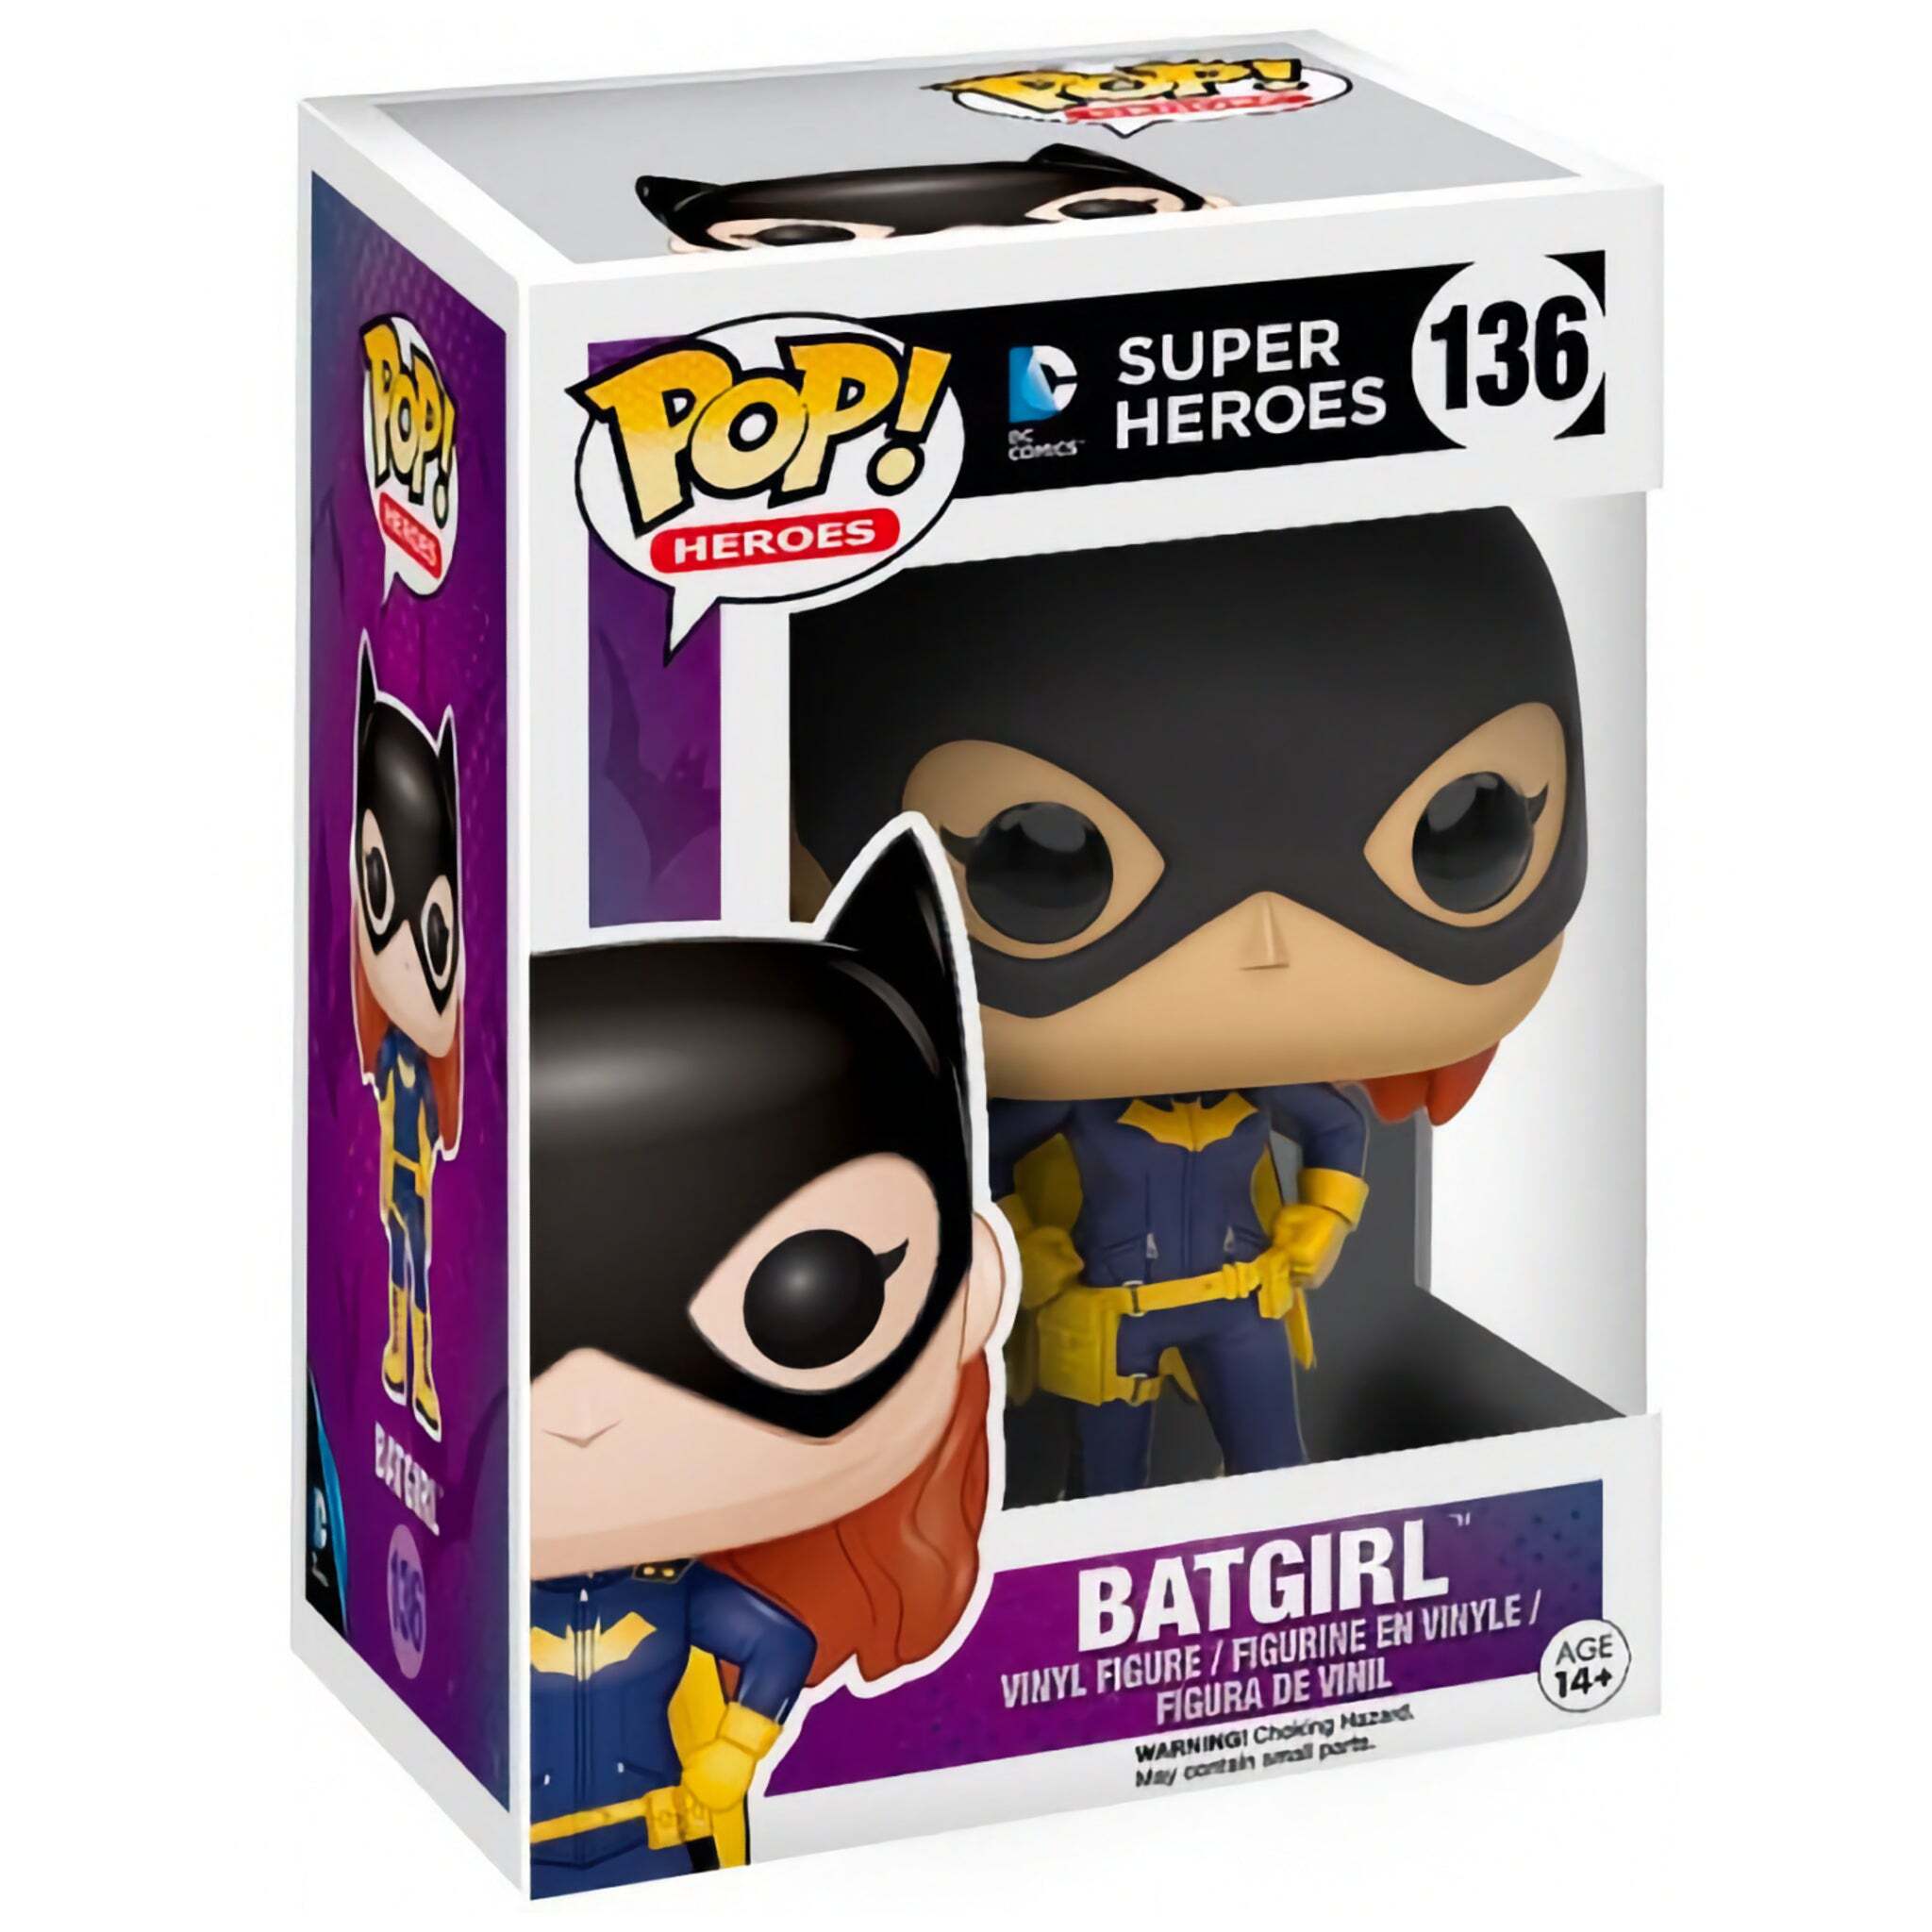 Batgirl Funko Pop!